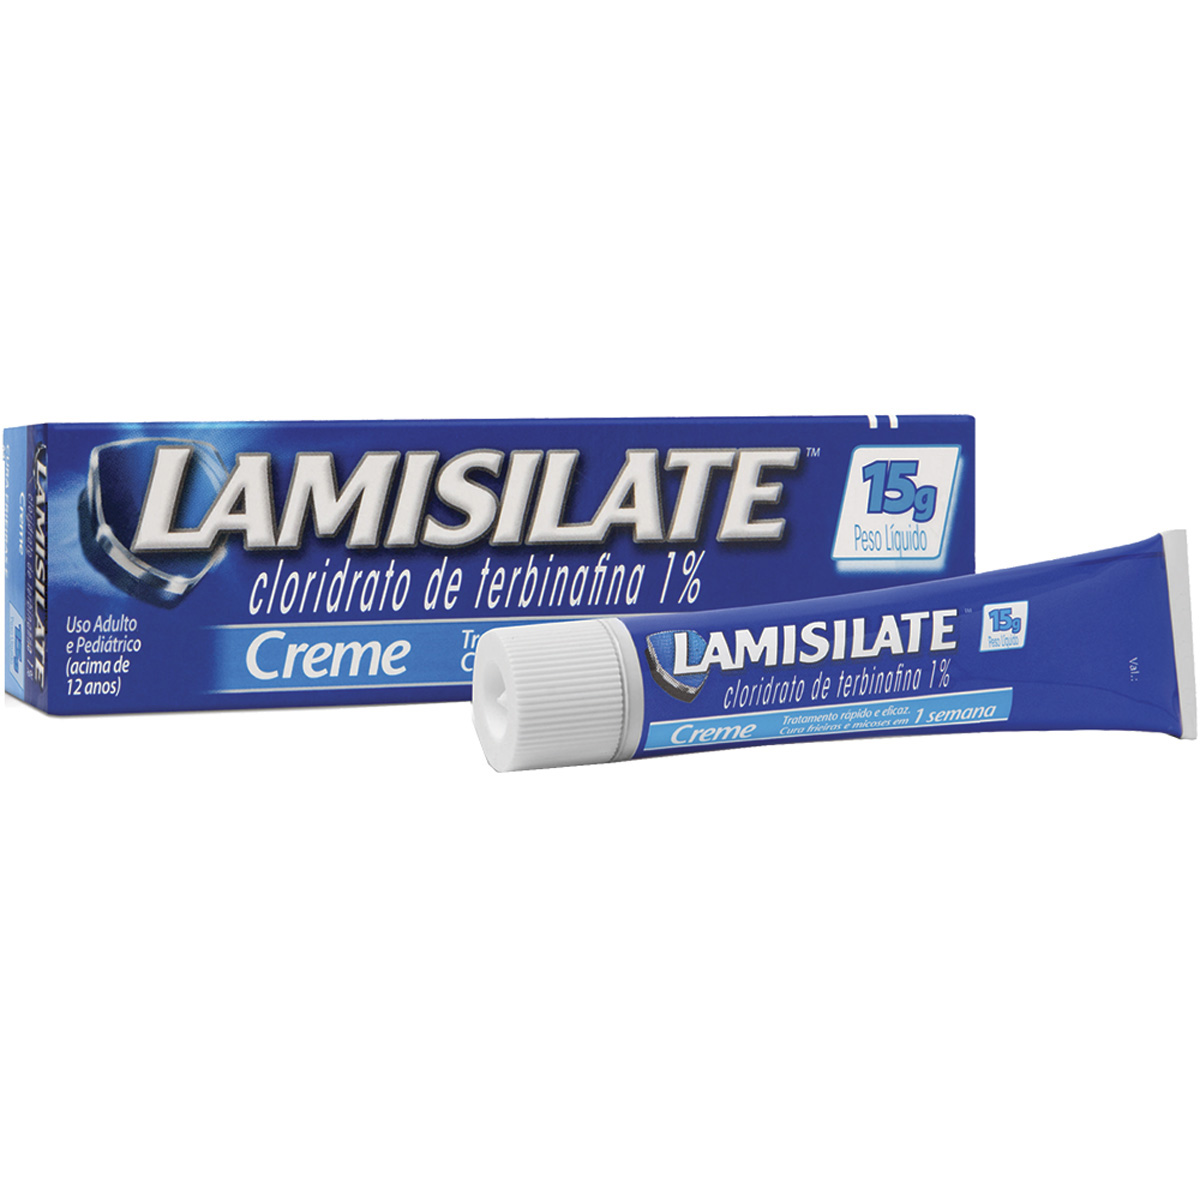 Antimicótico Lamisilate Creme 15g